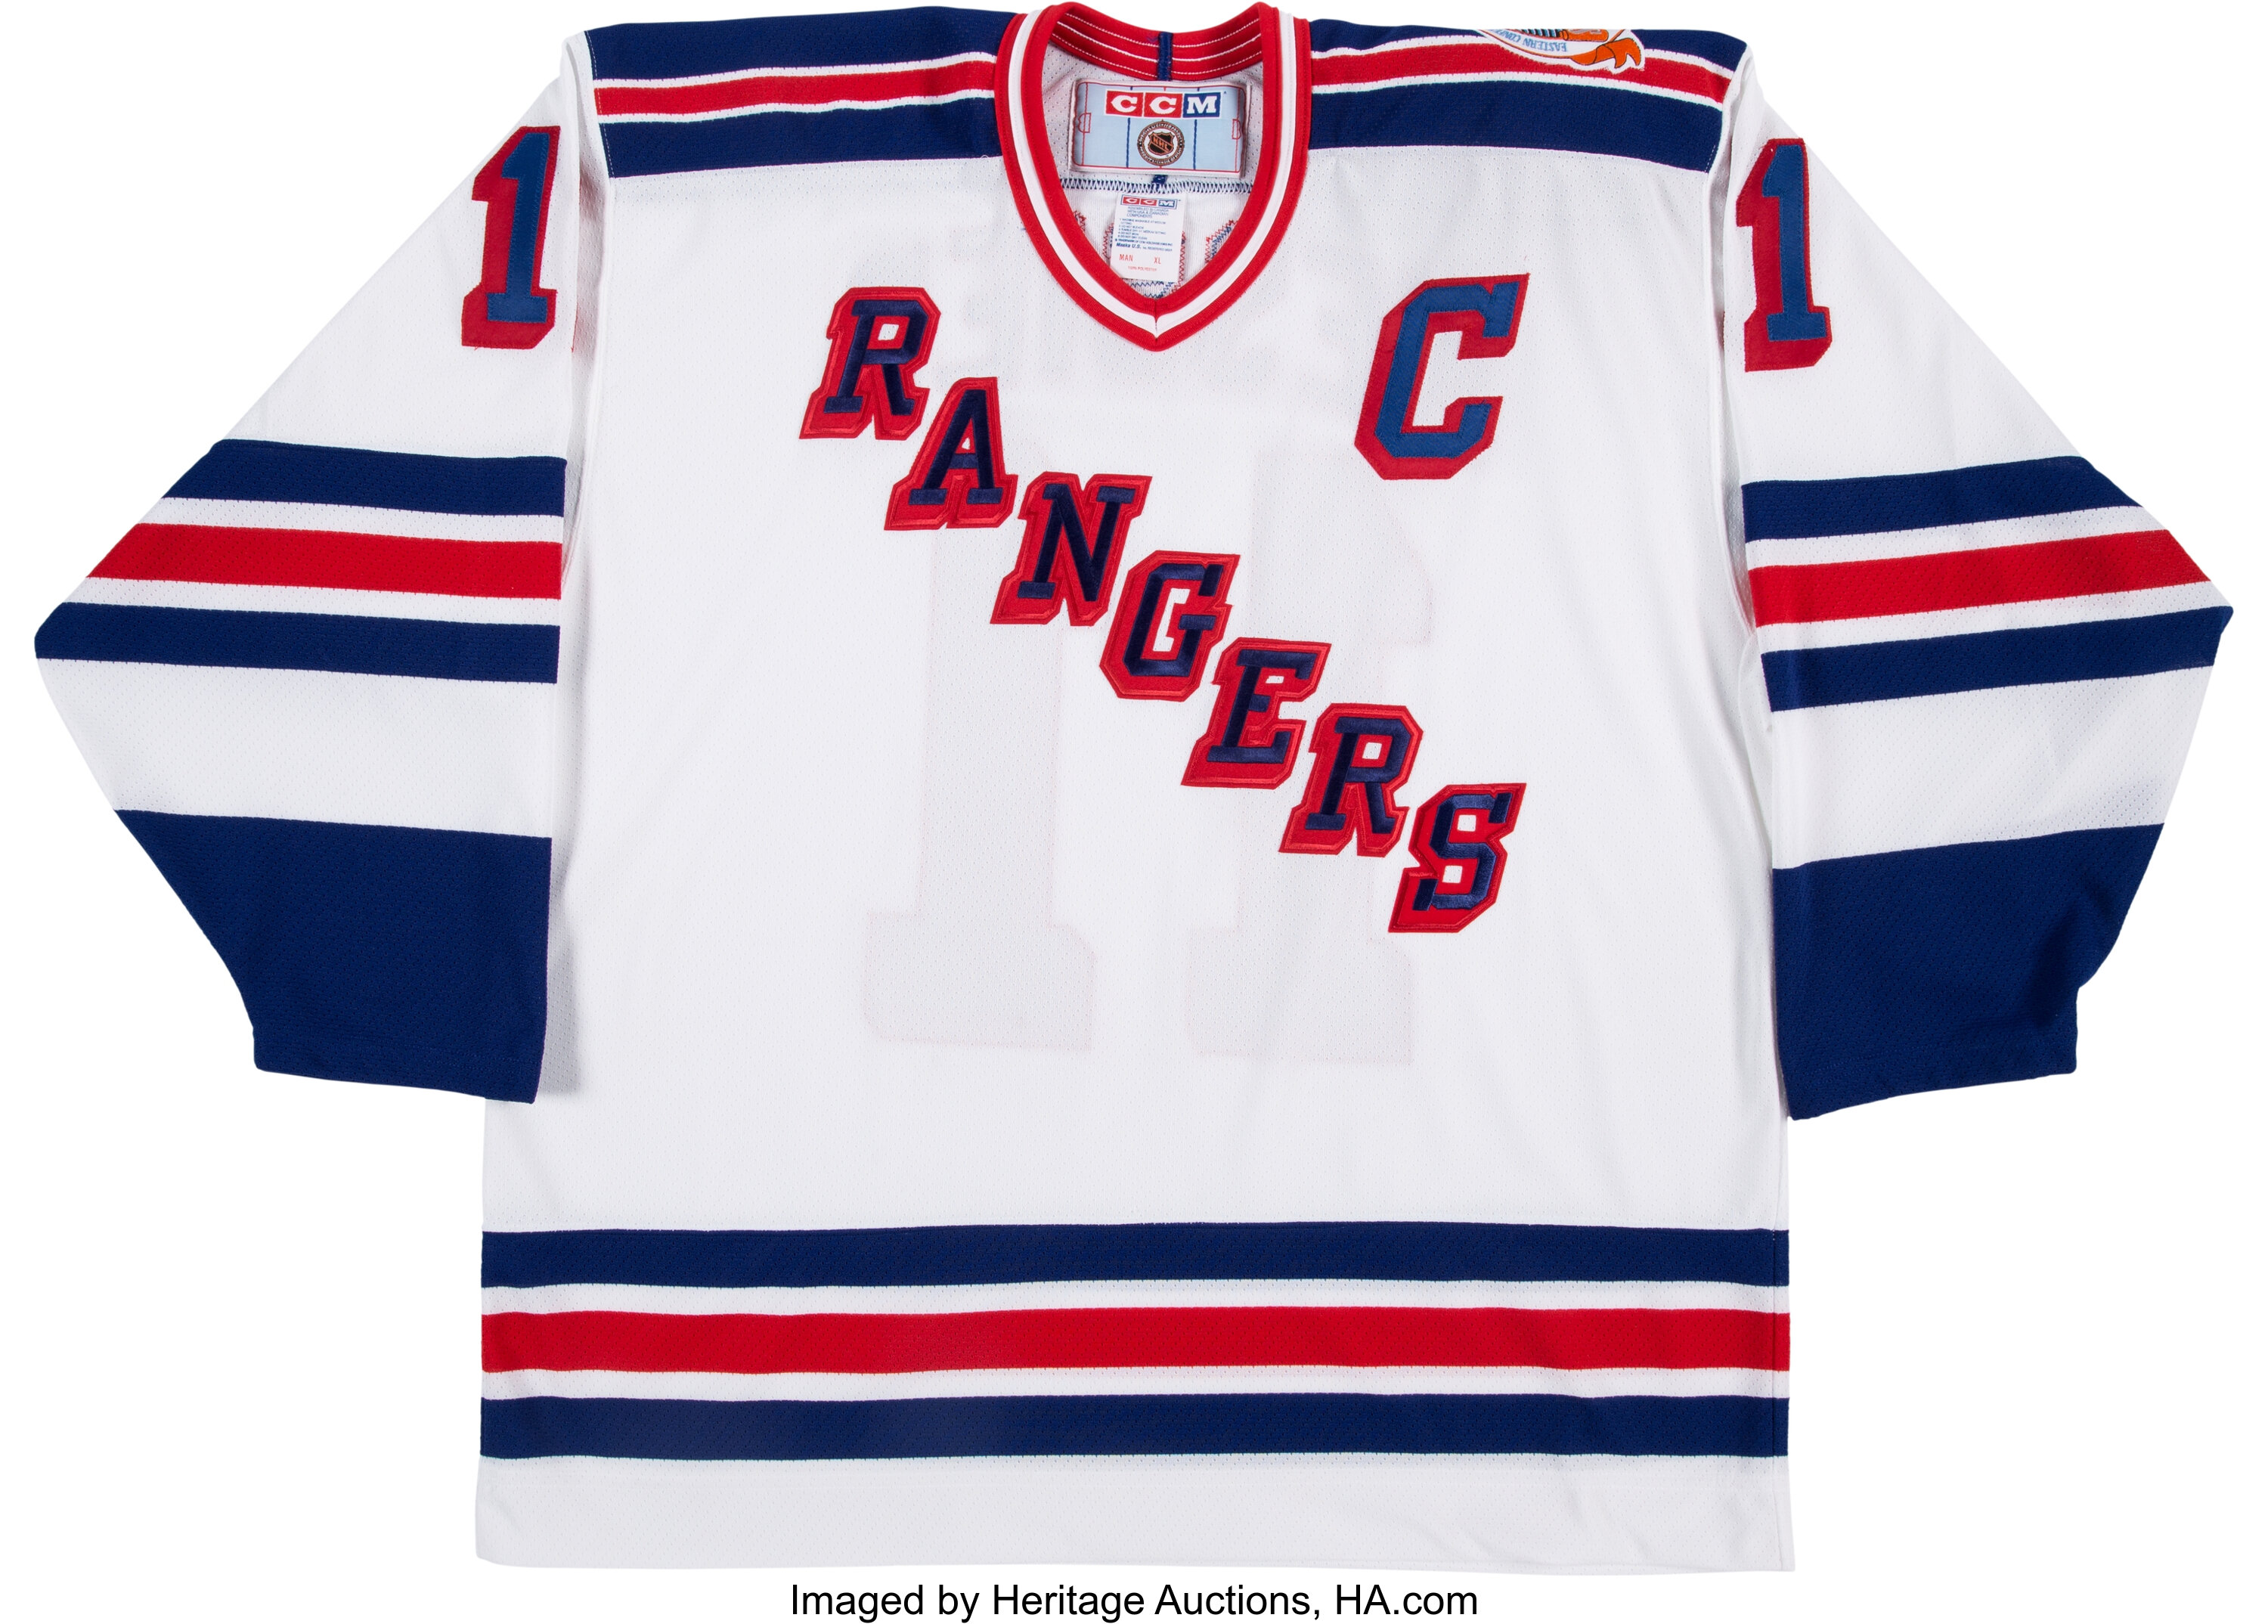 NHL JERSEY RANGERS NY (AWAY) SIGNED - MARK MESSIER 11